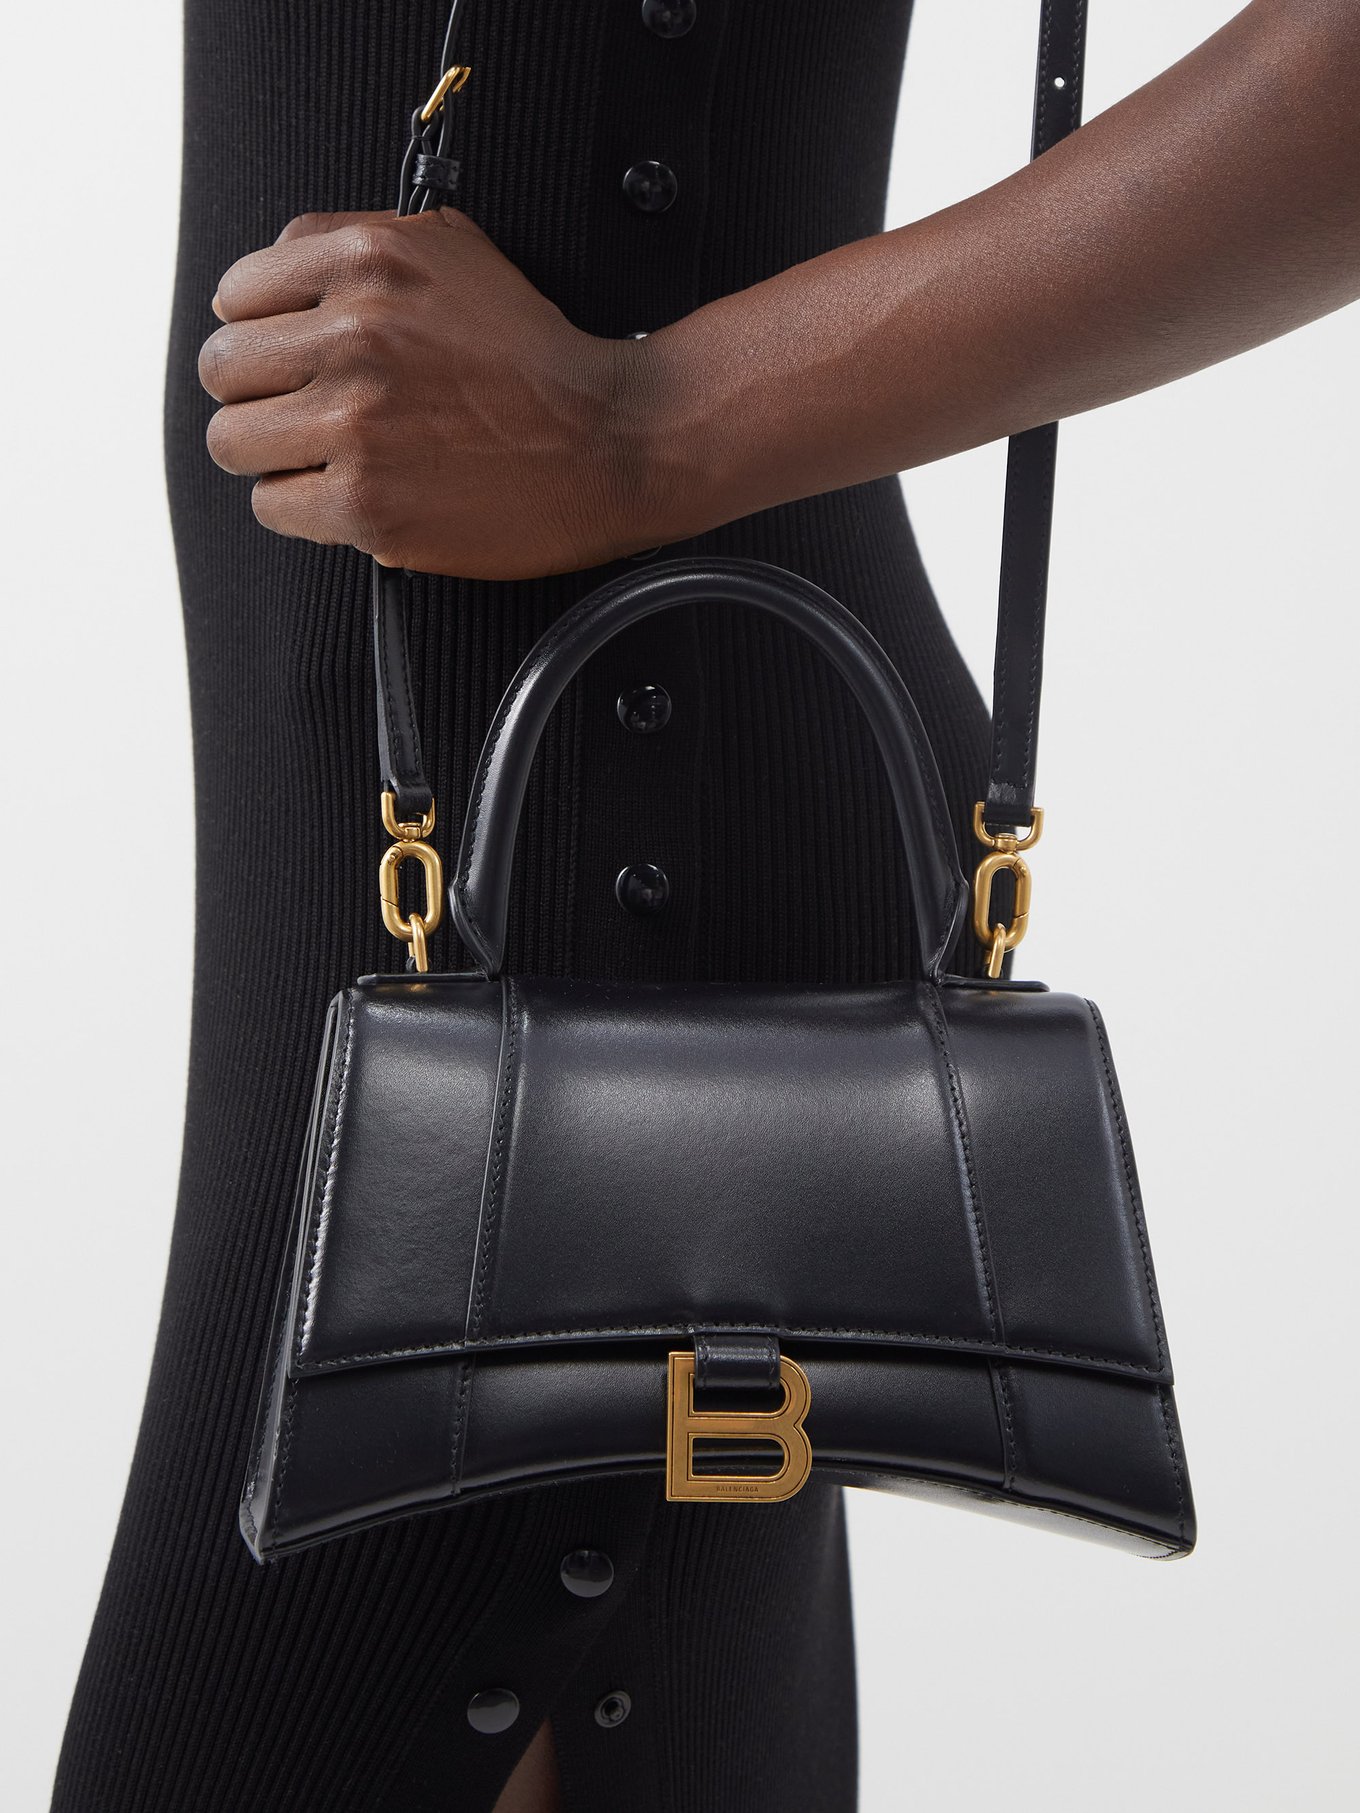 Balenciaga Hourglass Mini Bag in Black